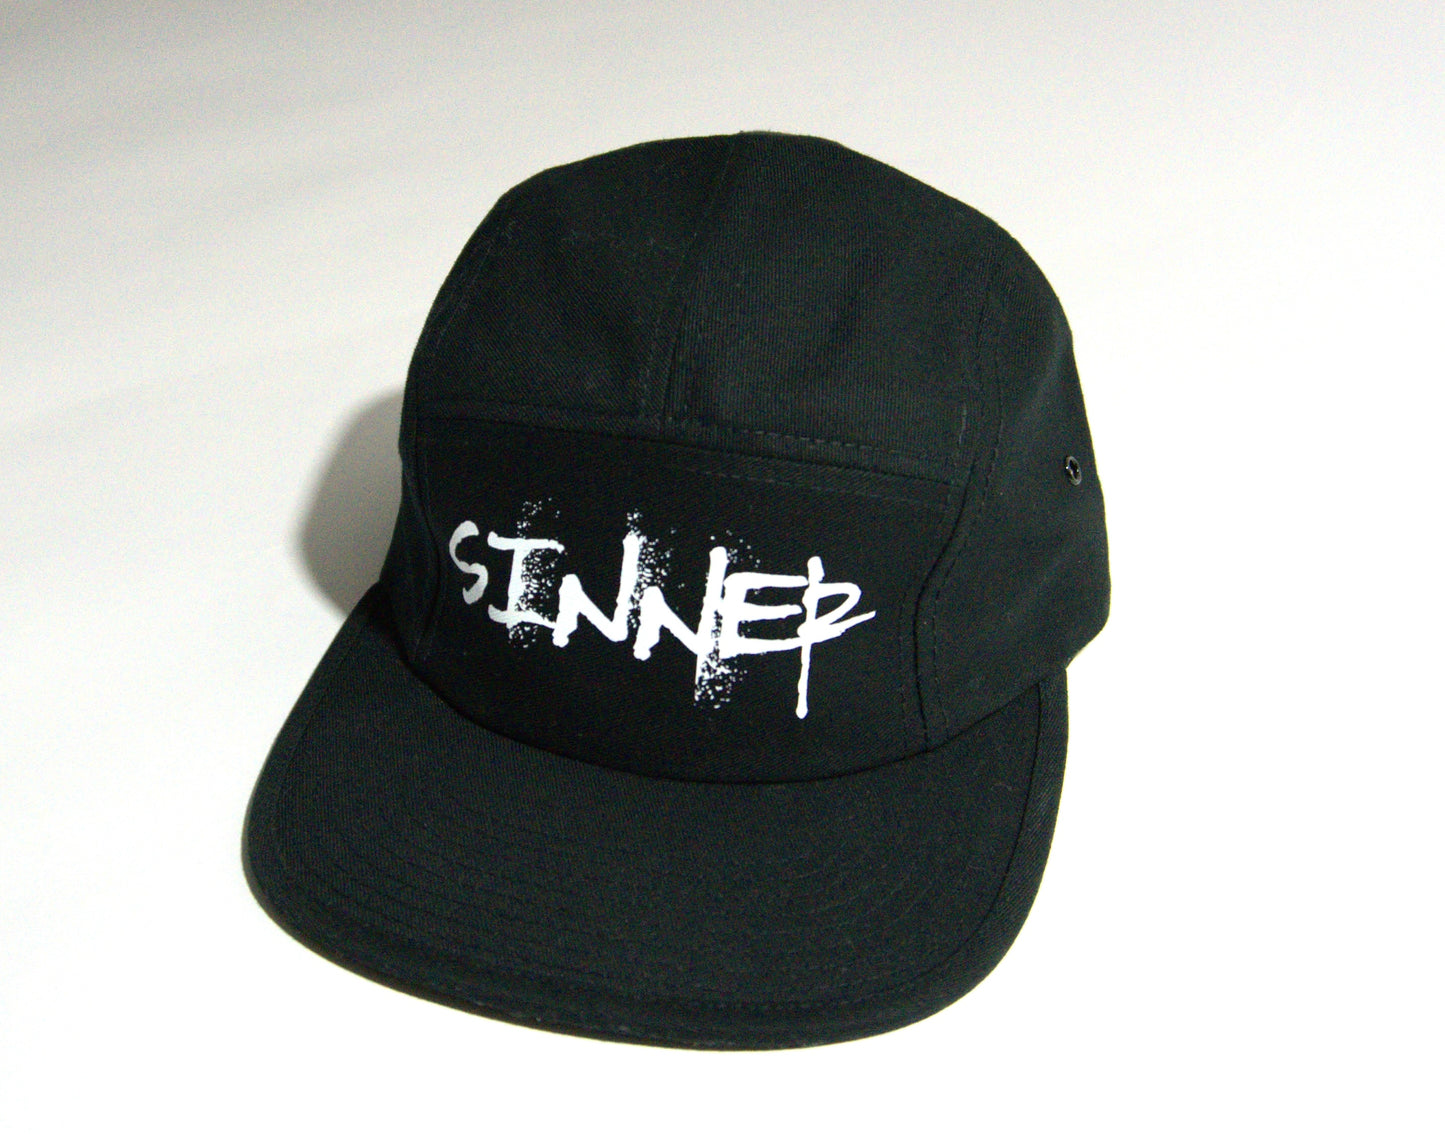 The Sinner Hat